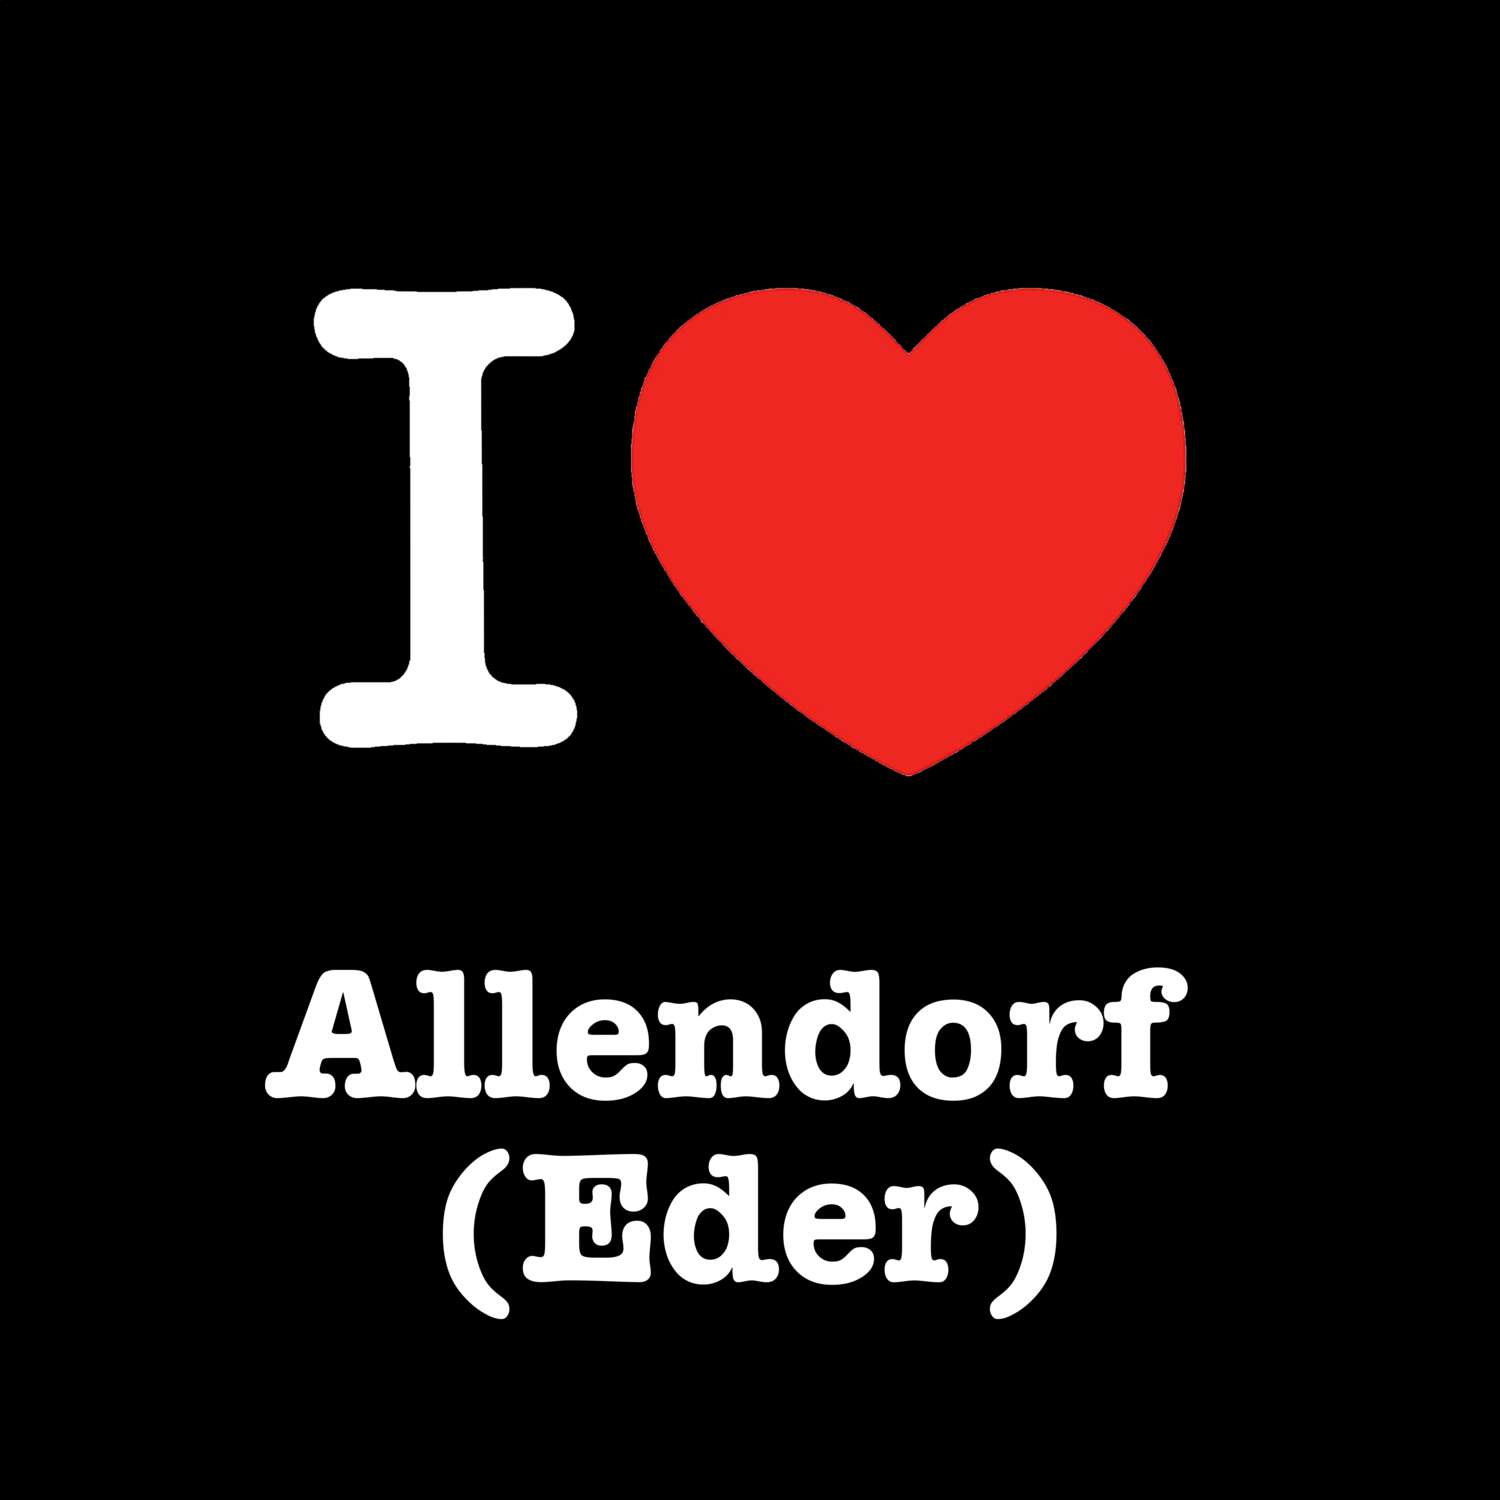 Allendorf (Eder) T-Shirt »I love«